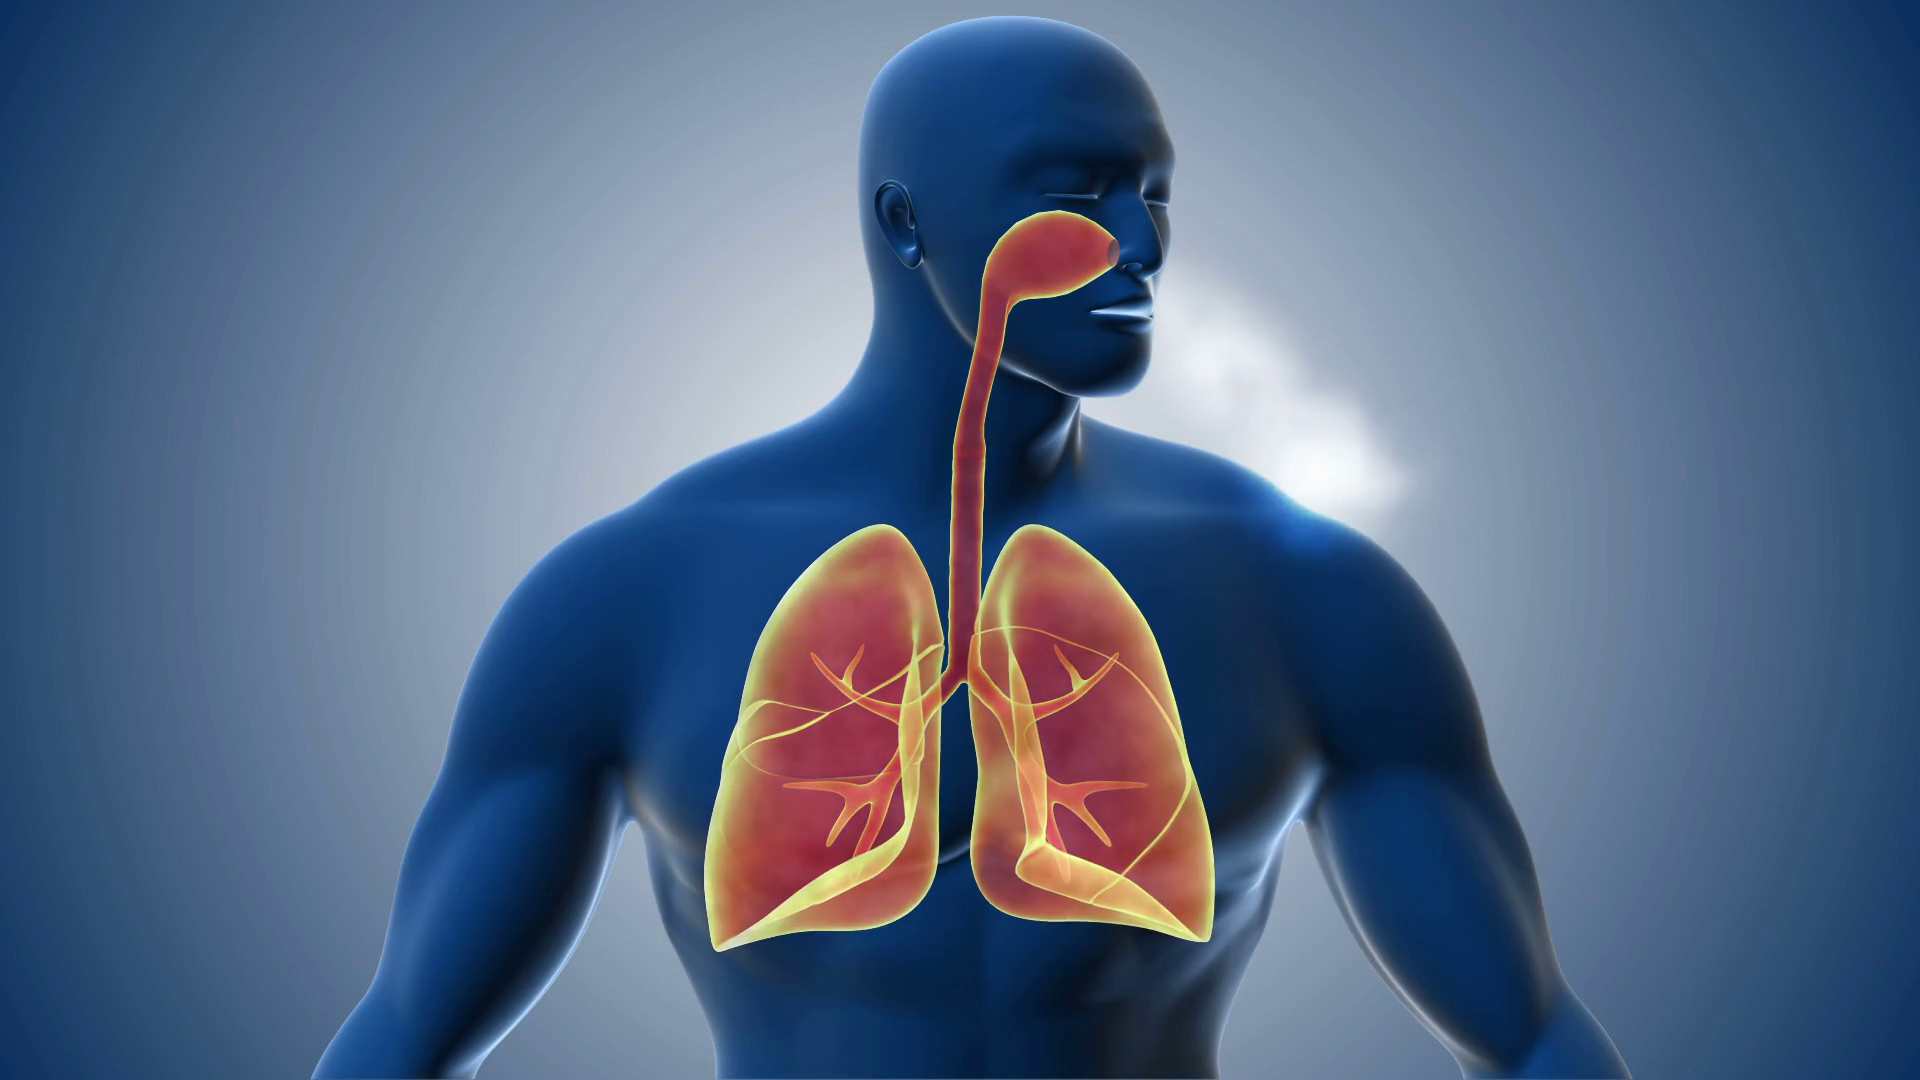 Human Respiratory System